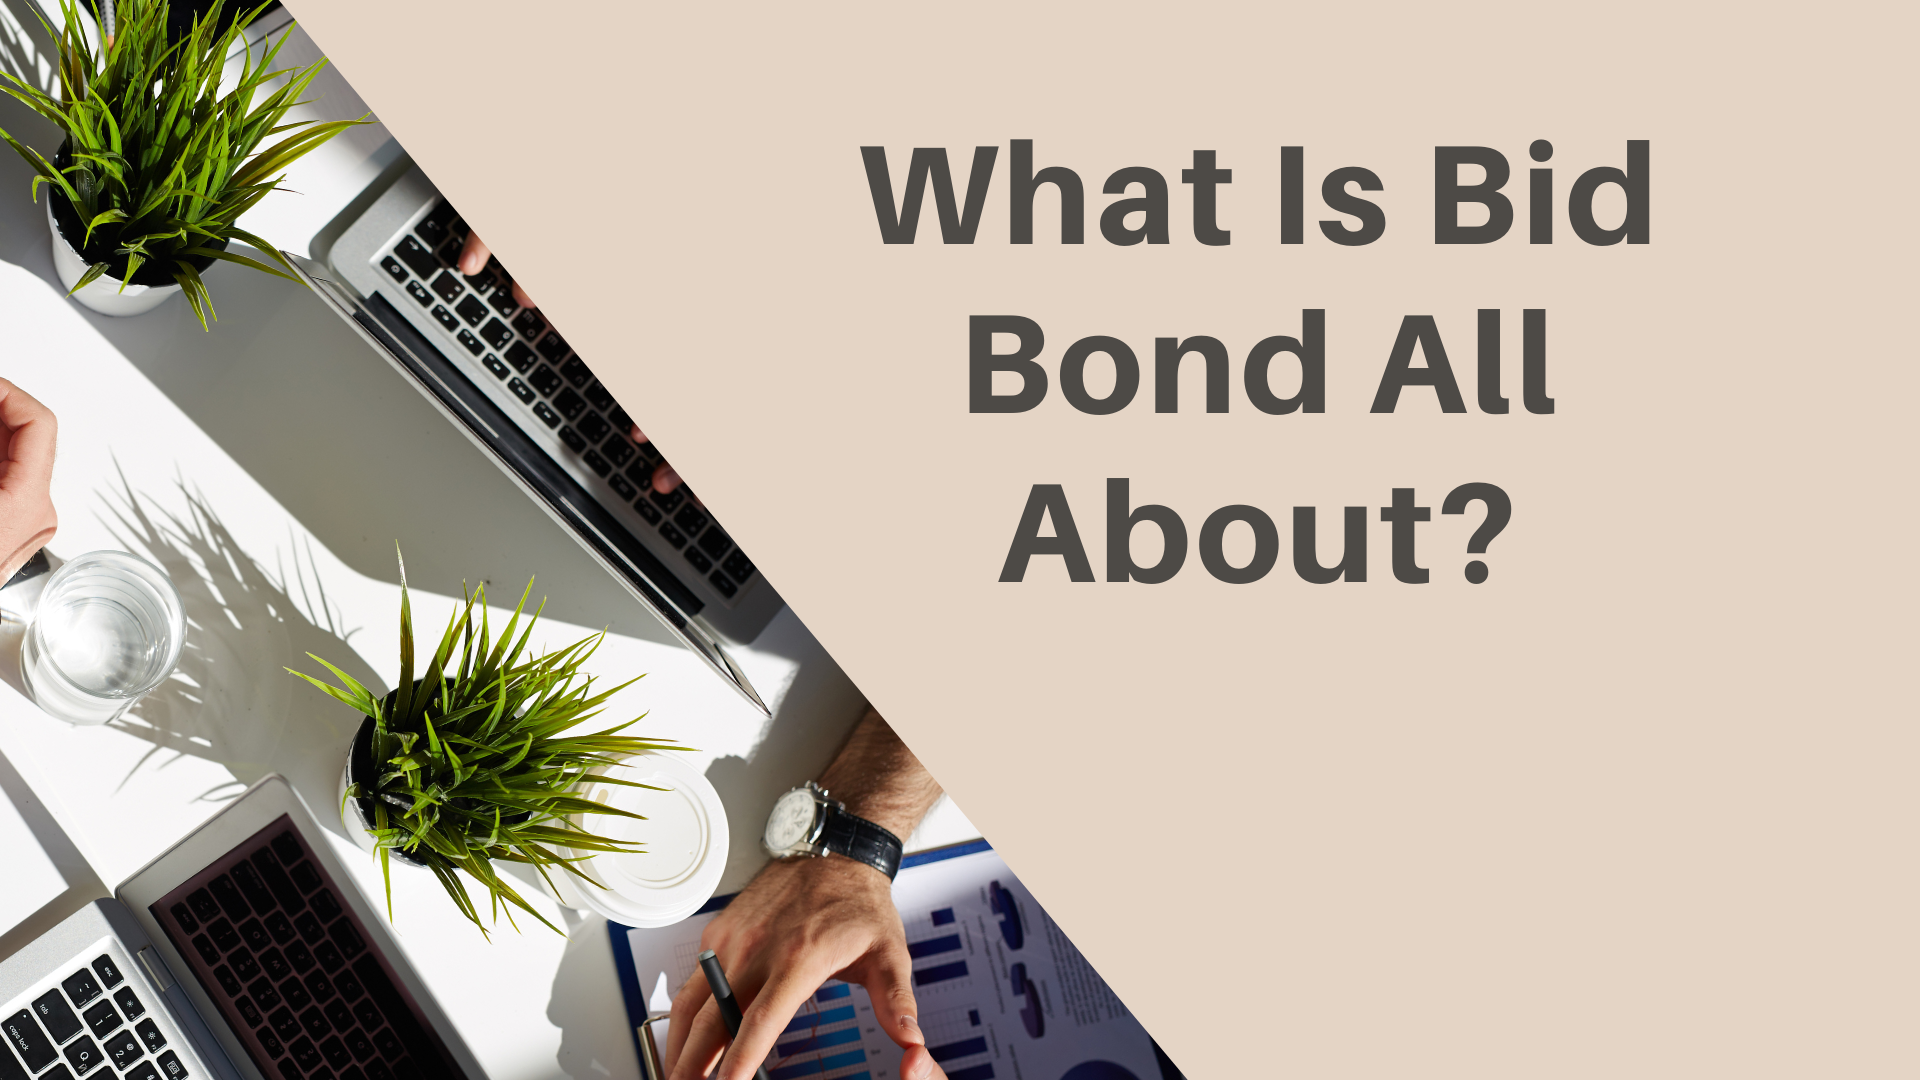 bid bond - What is a bid bond - working